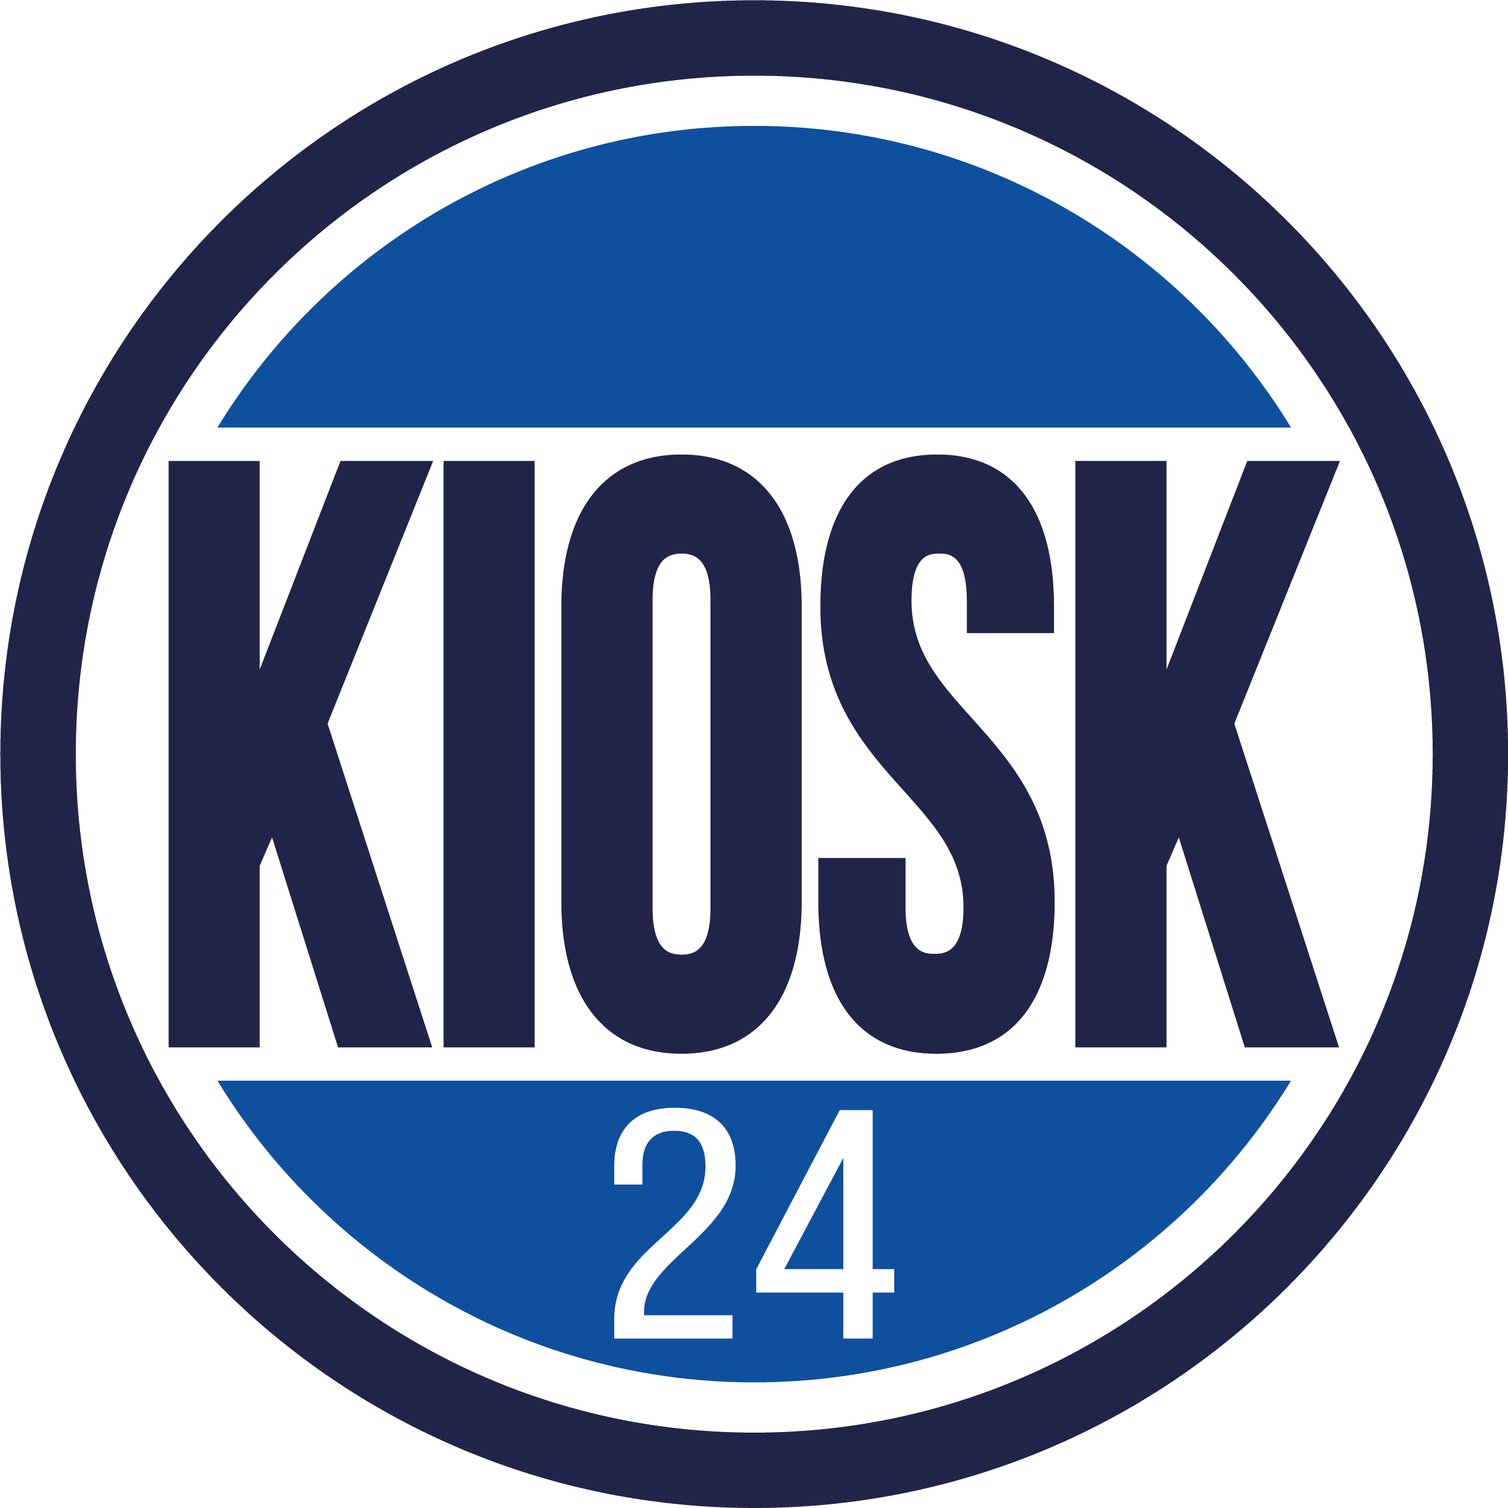 Kiosk24